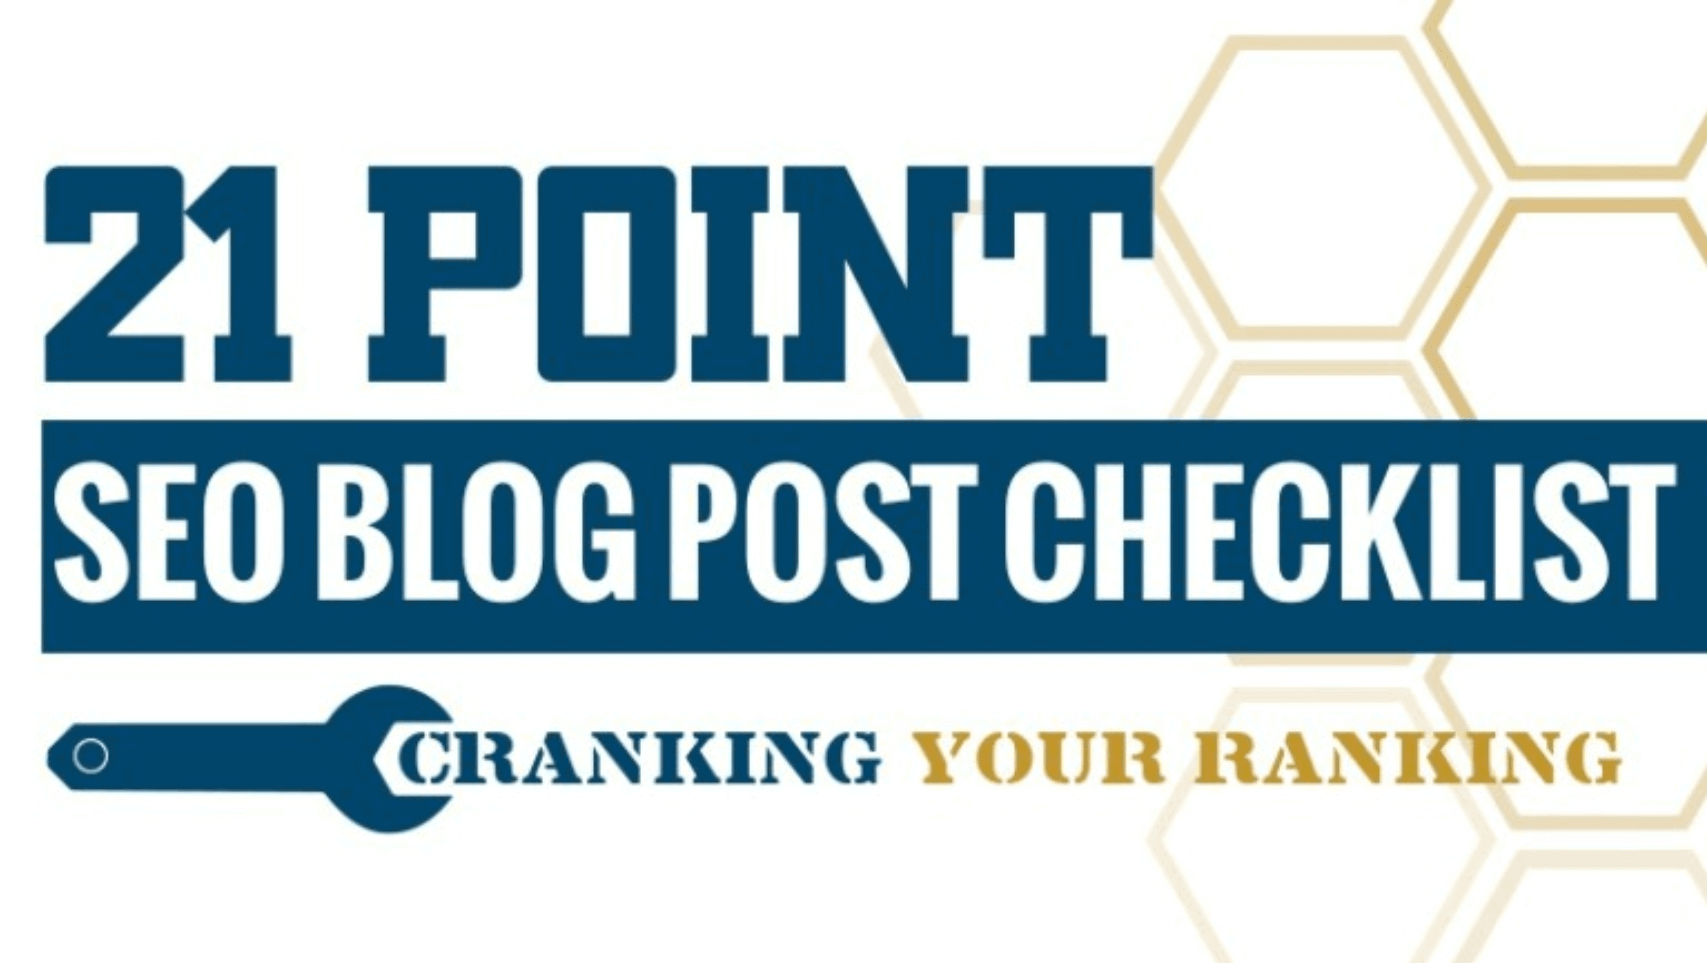 Online Marketing 101: 21 Point Checklist for Effective Blogging [Infographic]